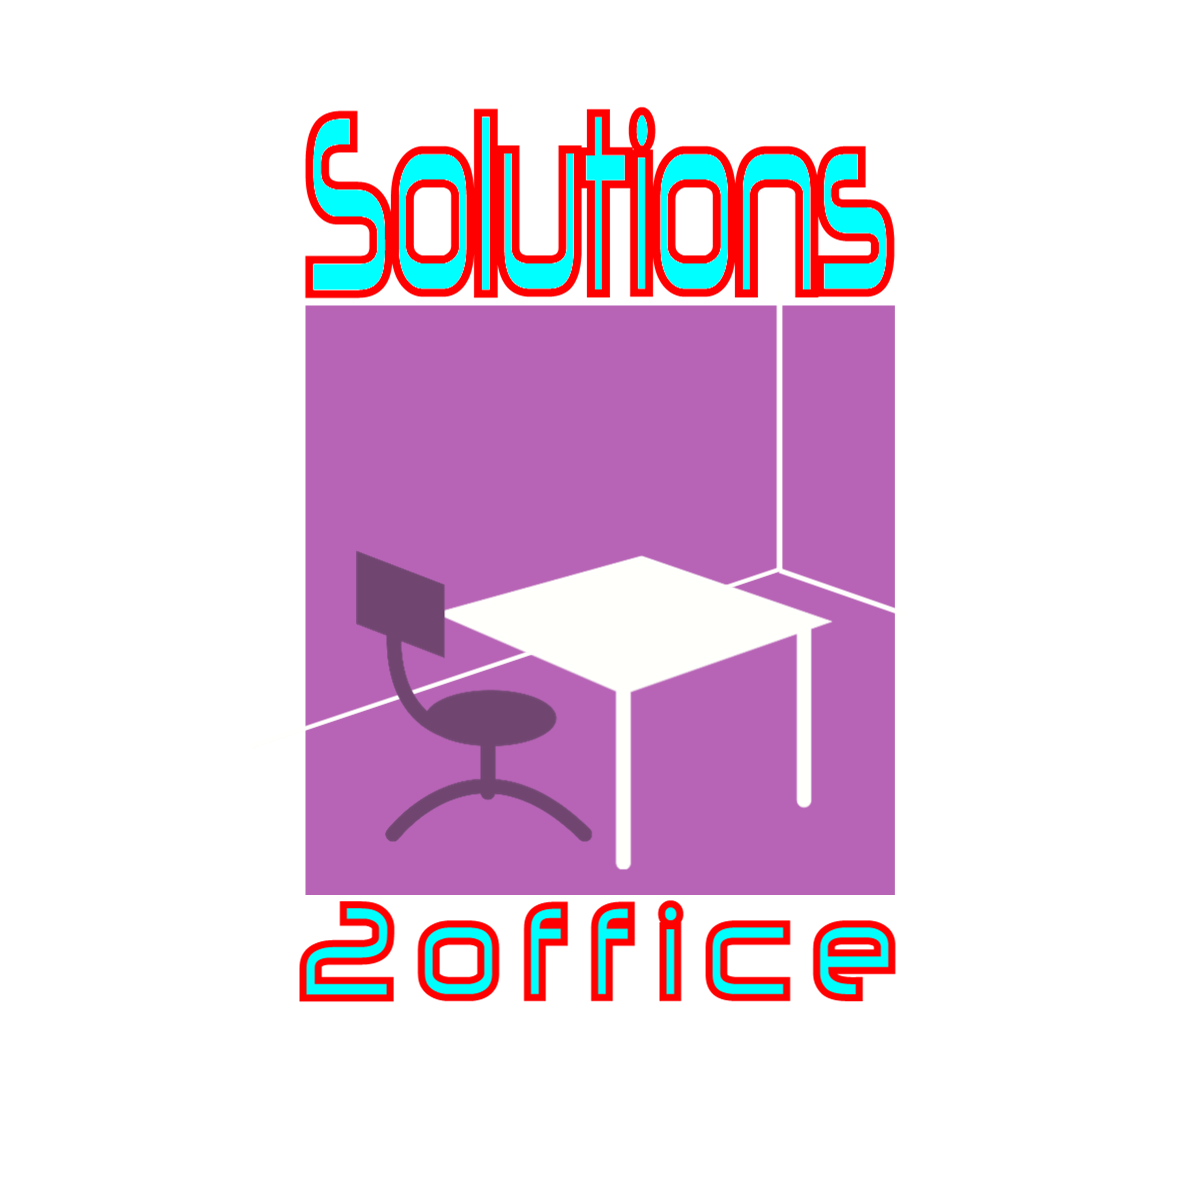 Solutions 2 office logo